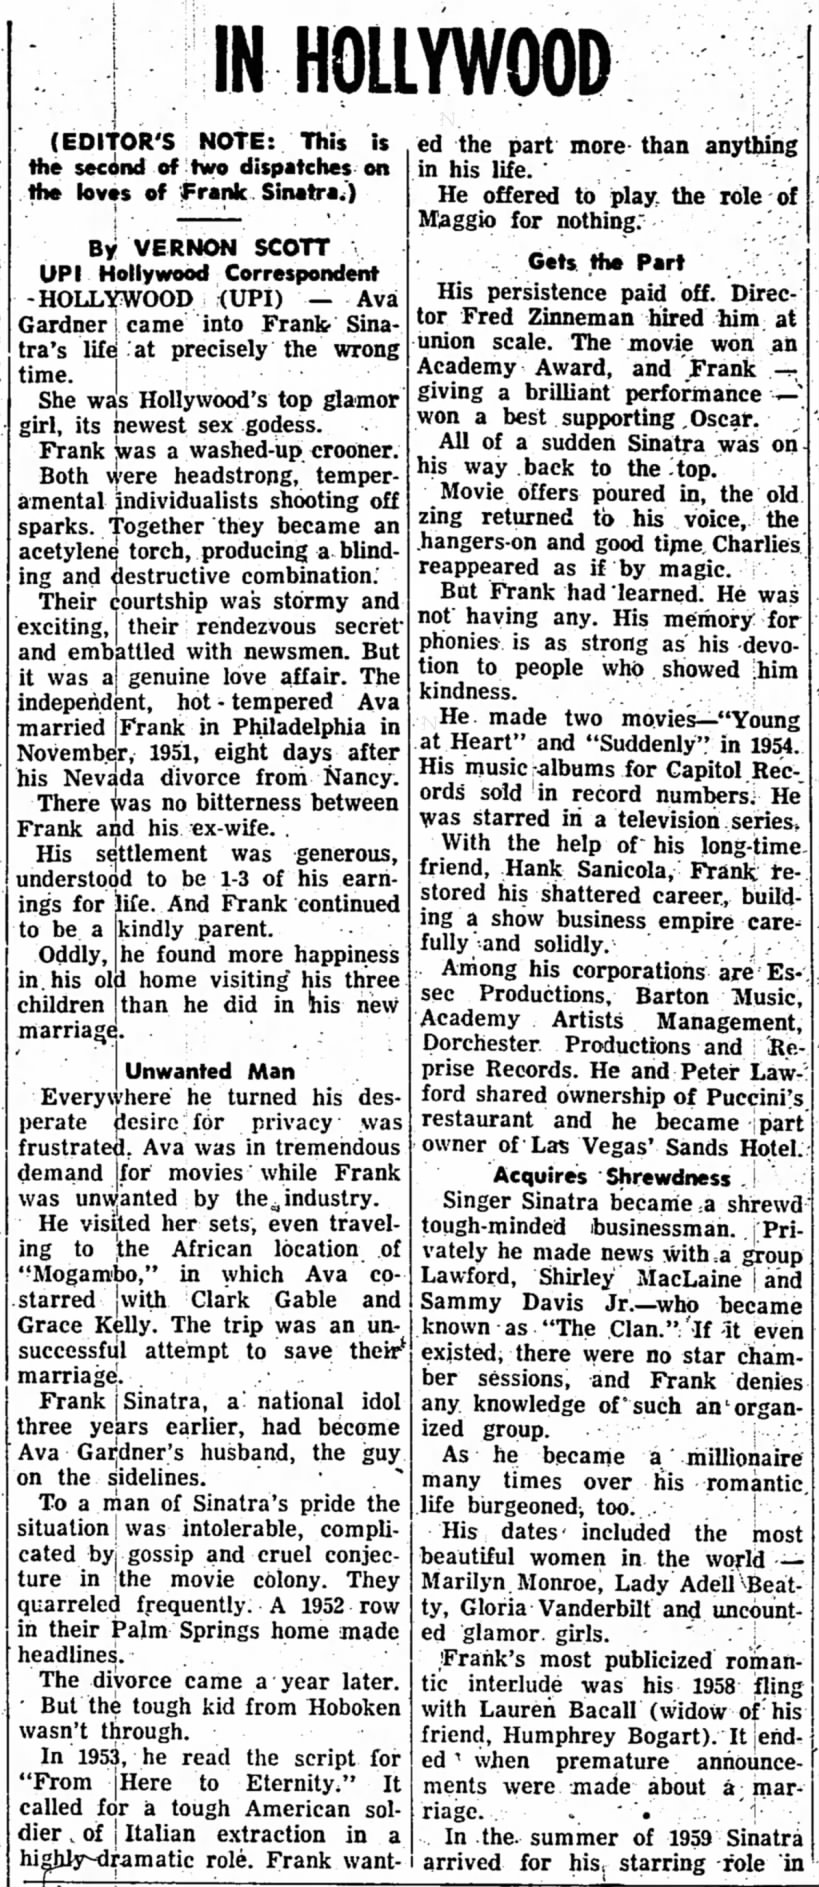 In Hollywood, Vernon Scott, The Tipton Daily Tribune (Tipton, Indiana) 16 January 1962 p 2